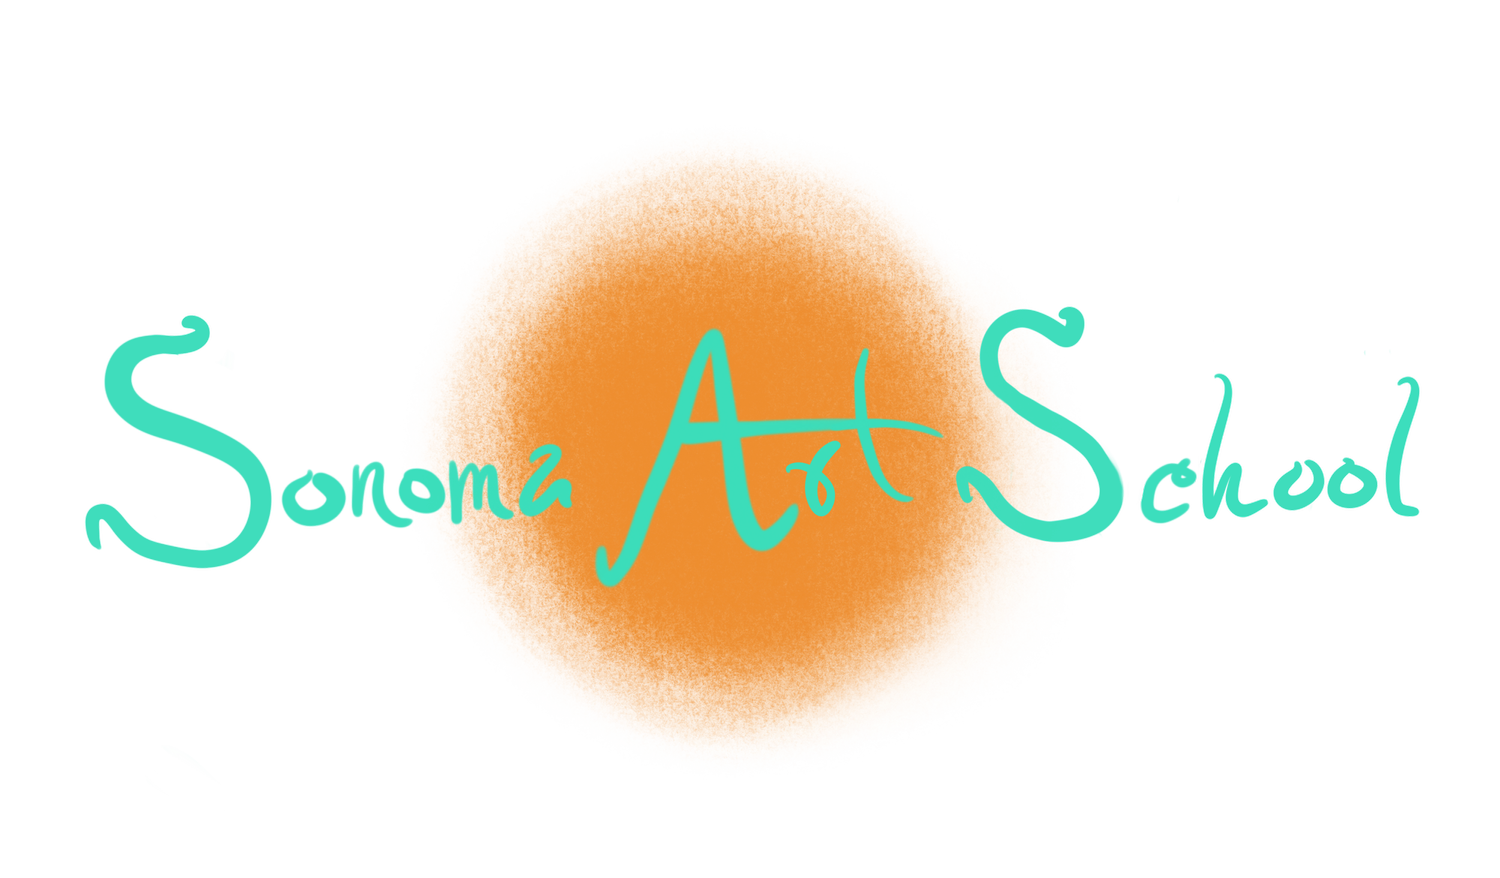 Sonoma Art School